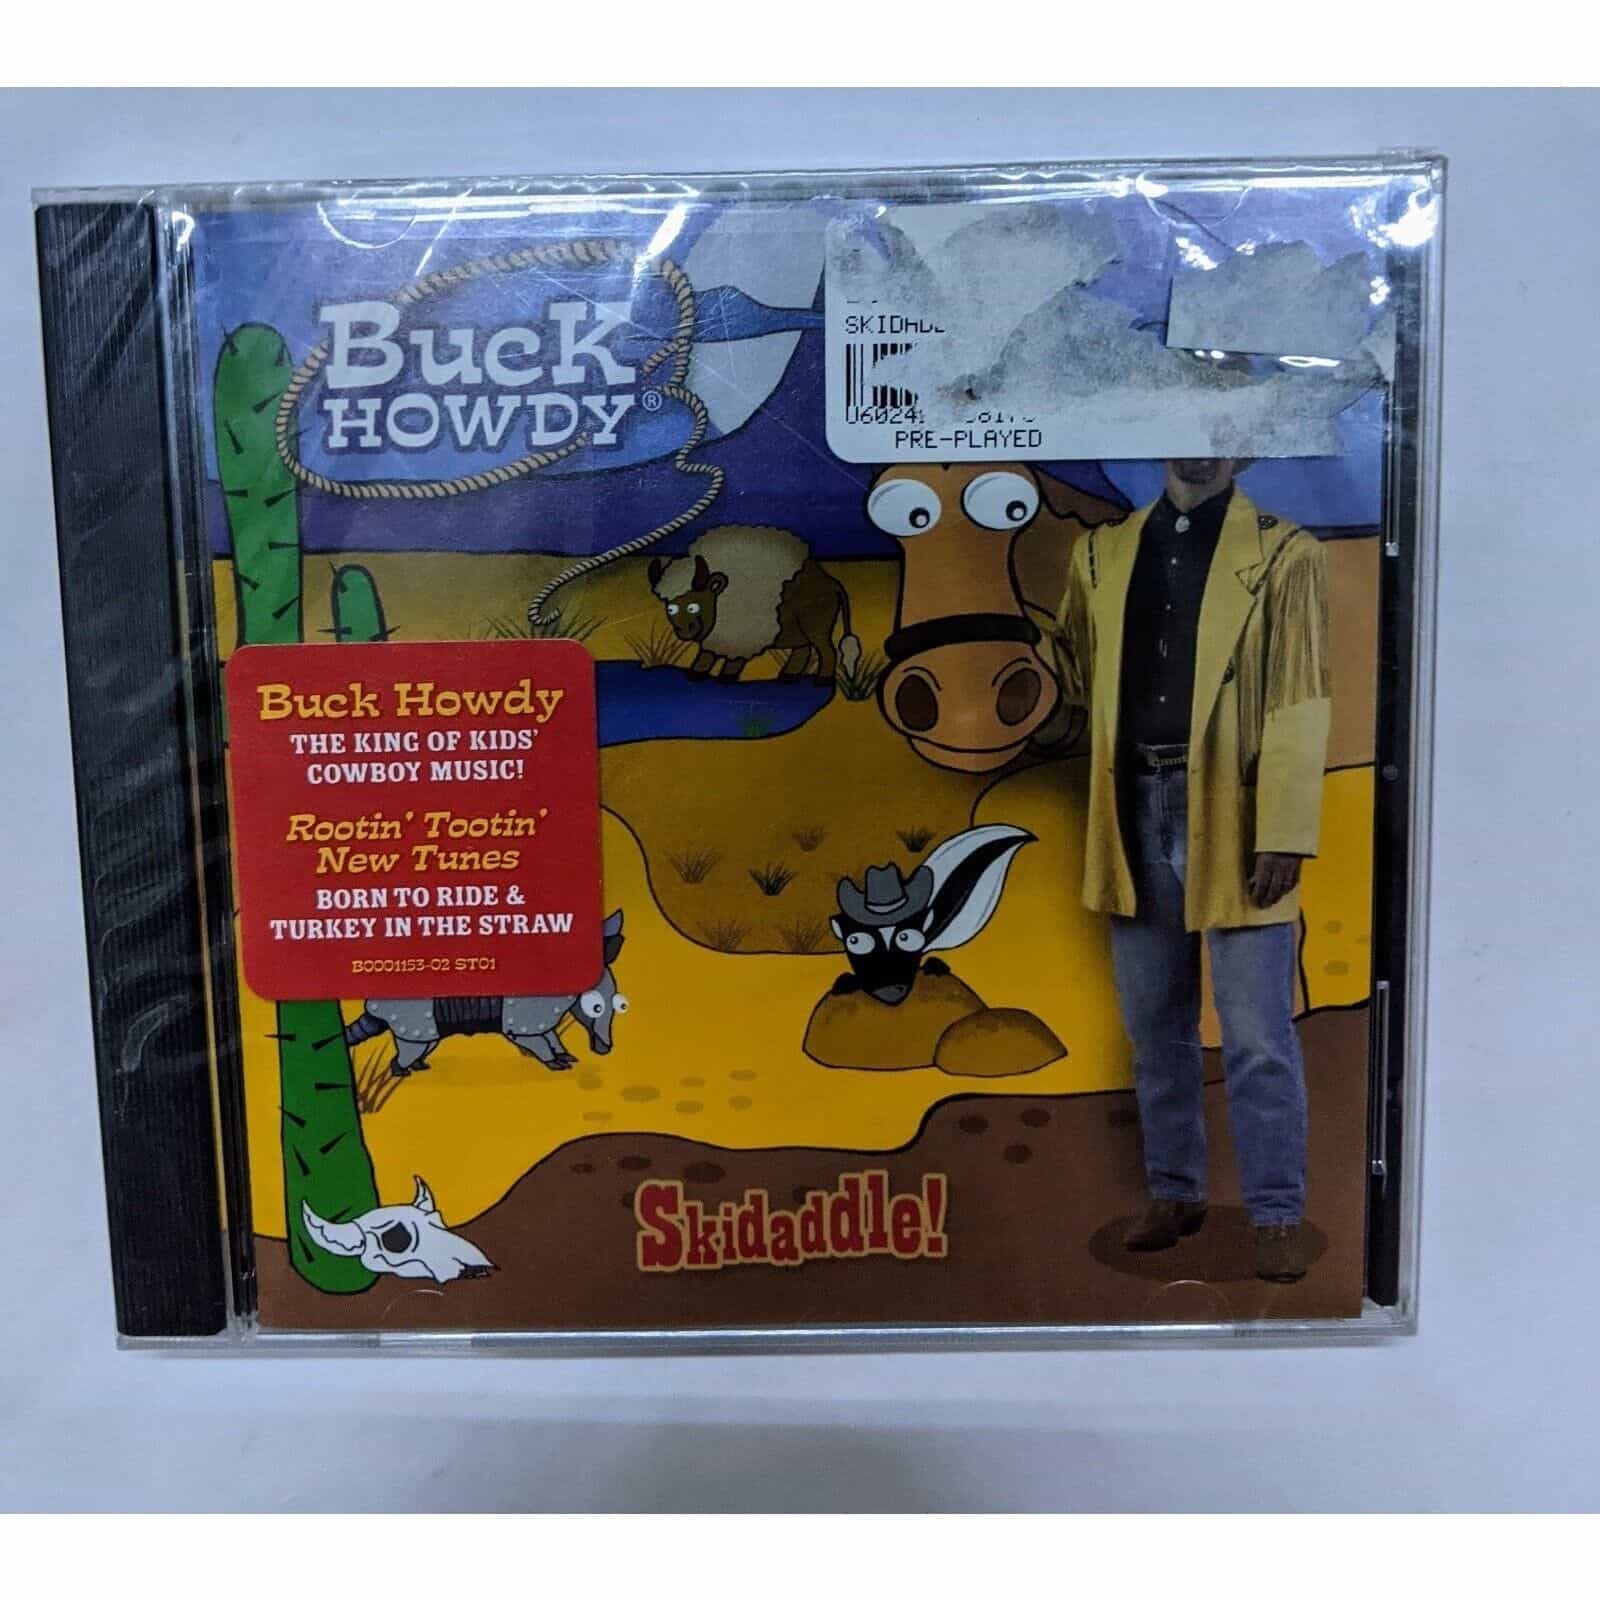 Skidaddle! By Buck Howdy Kids Music Album